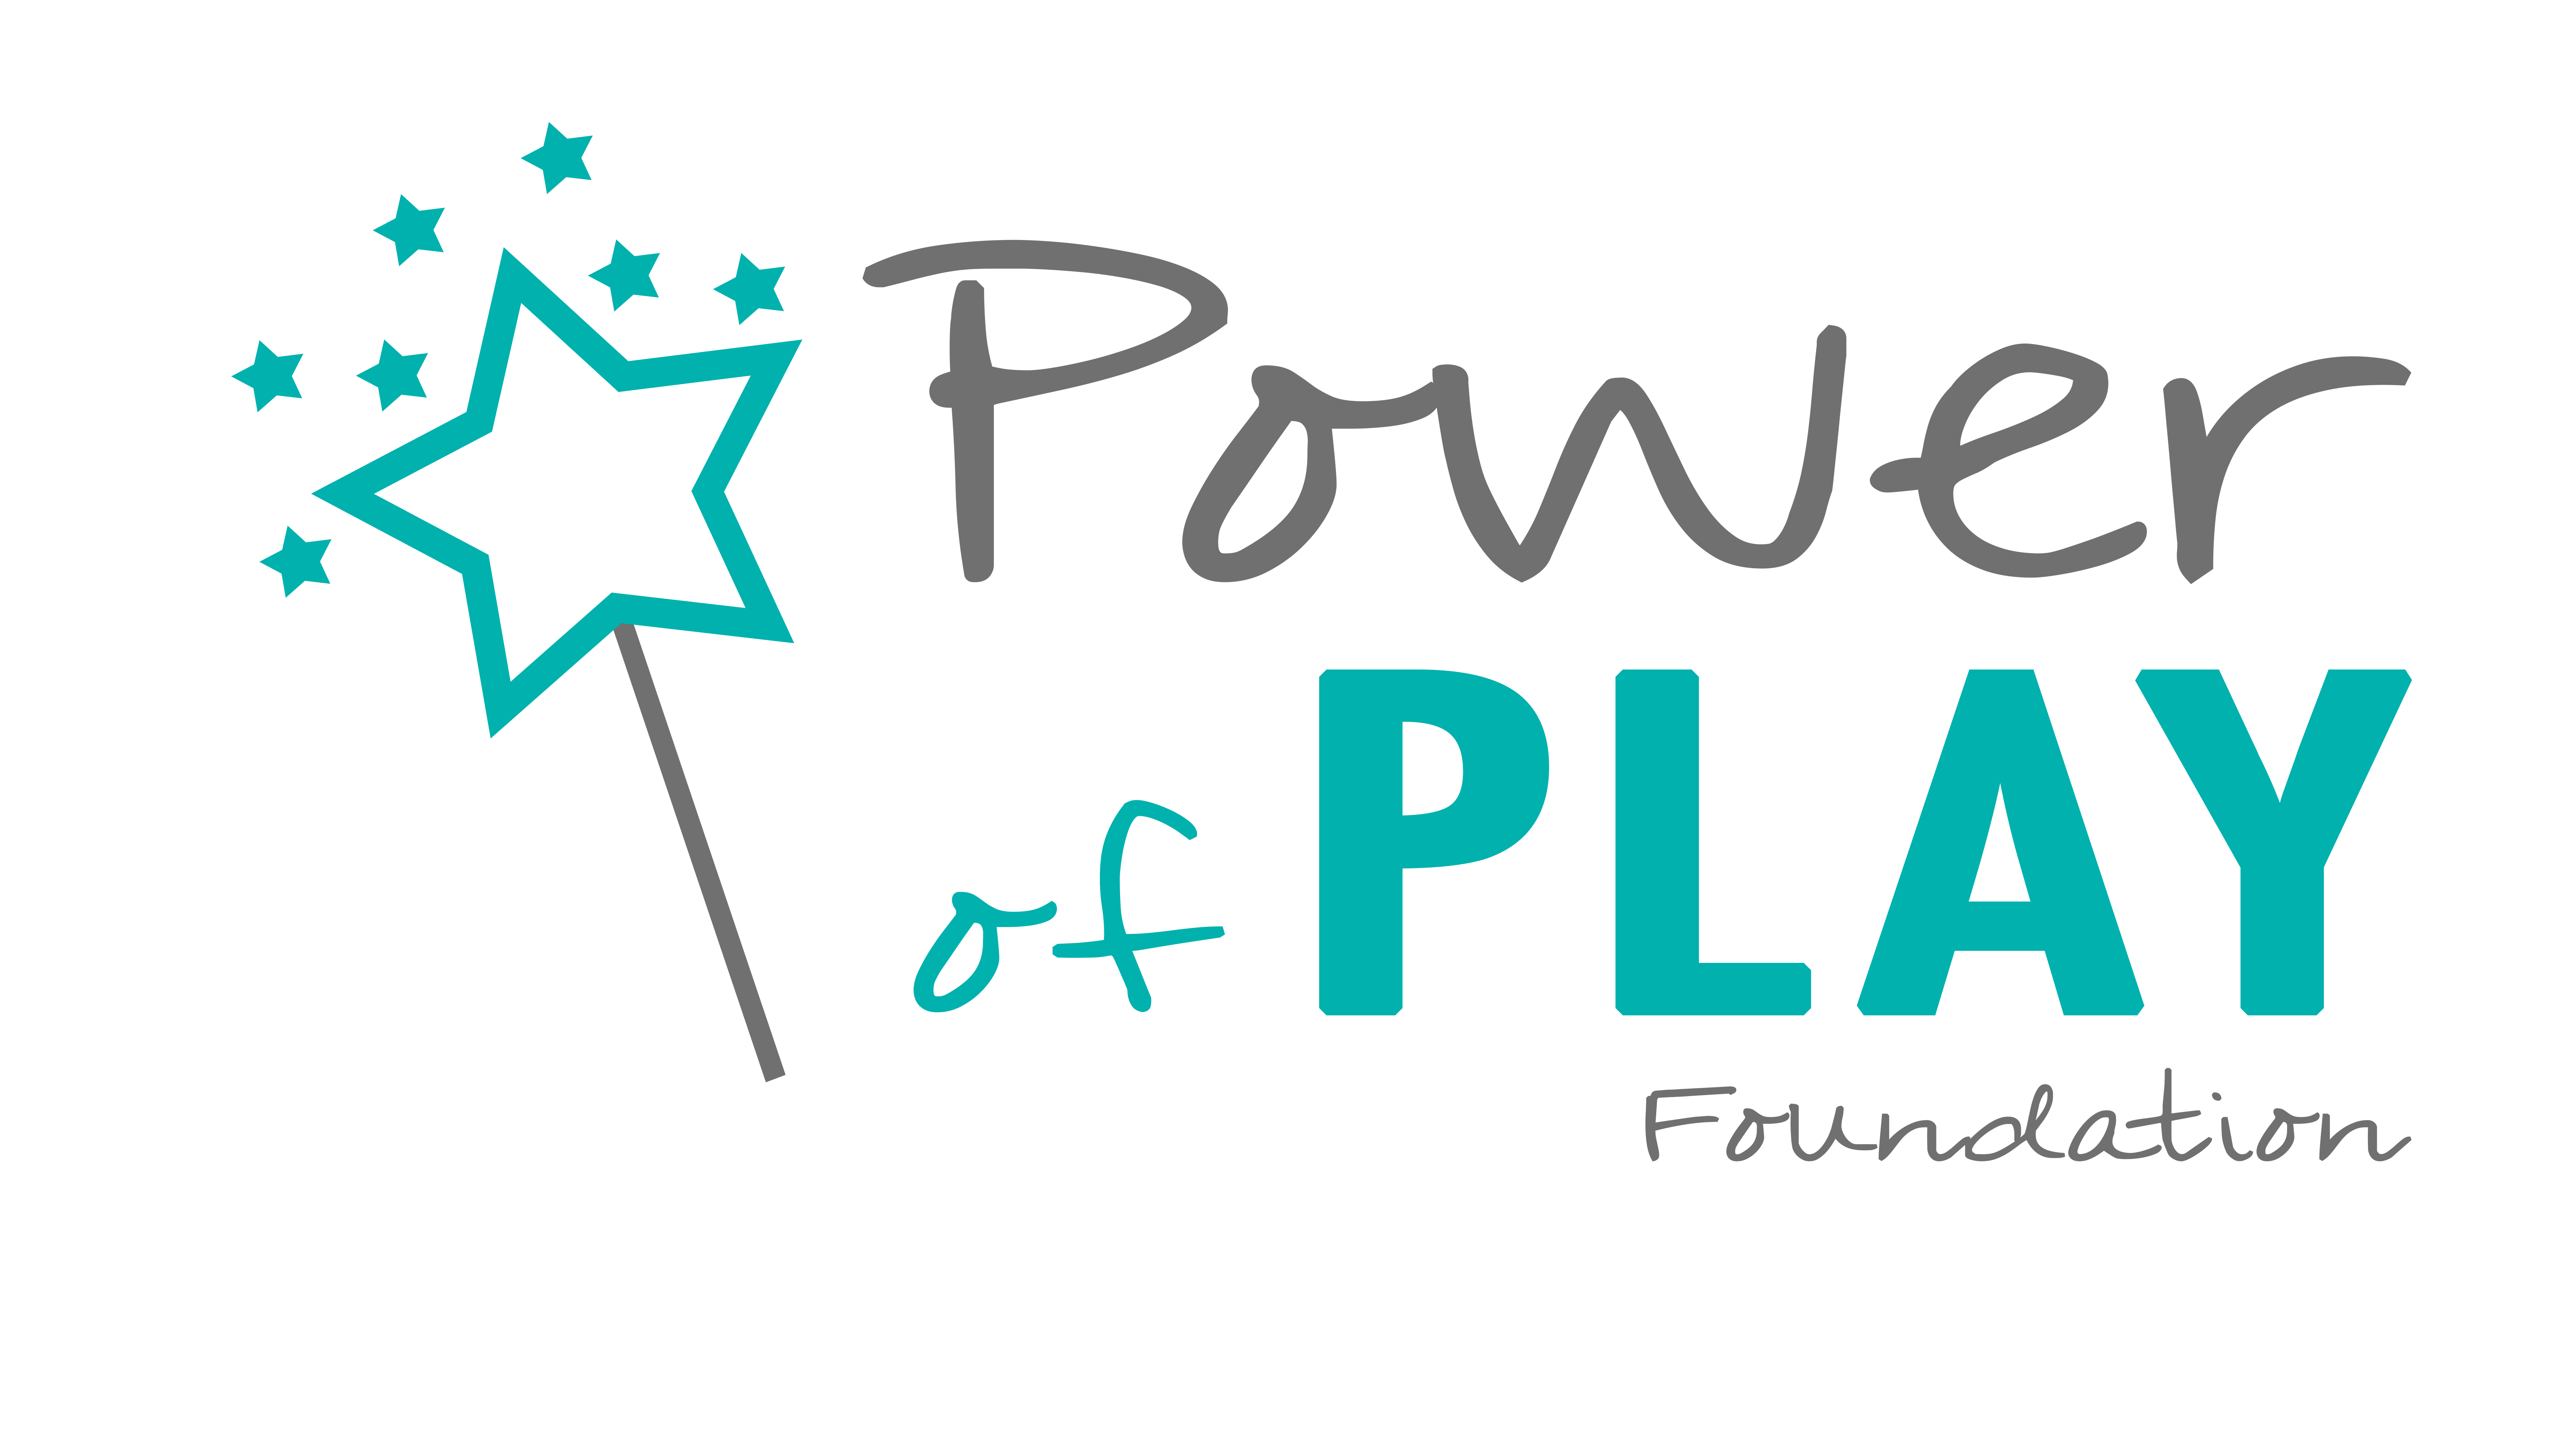 Power of Play Foundation logo